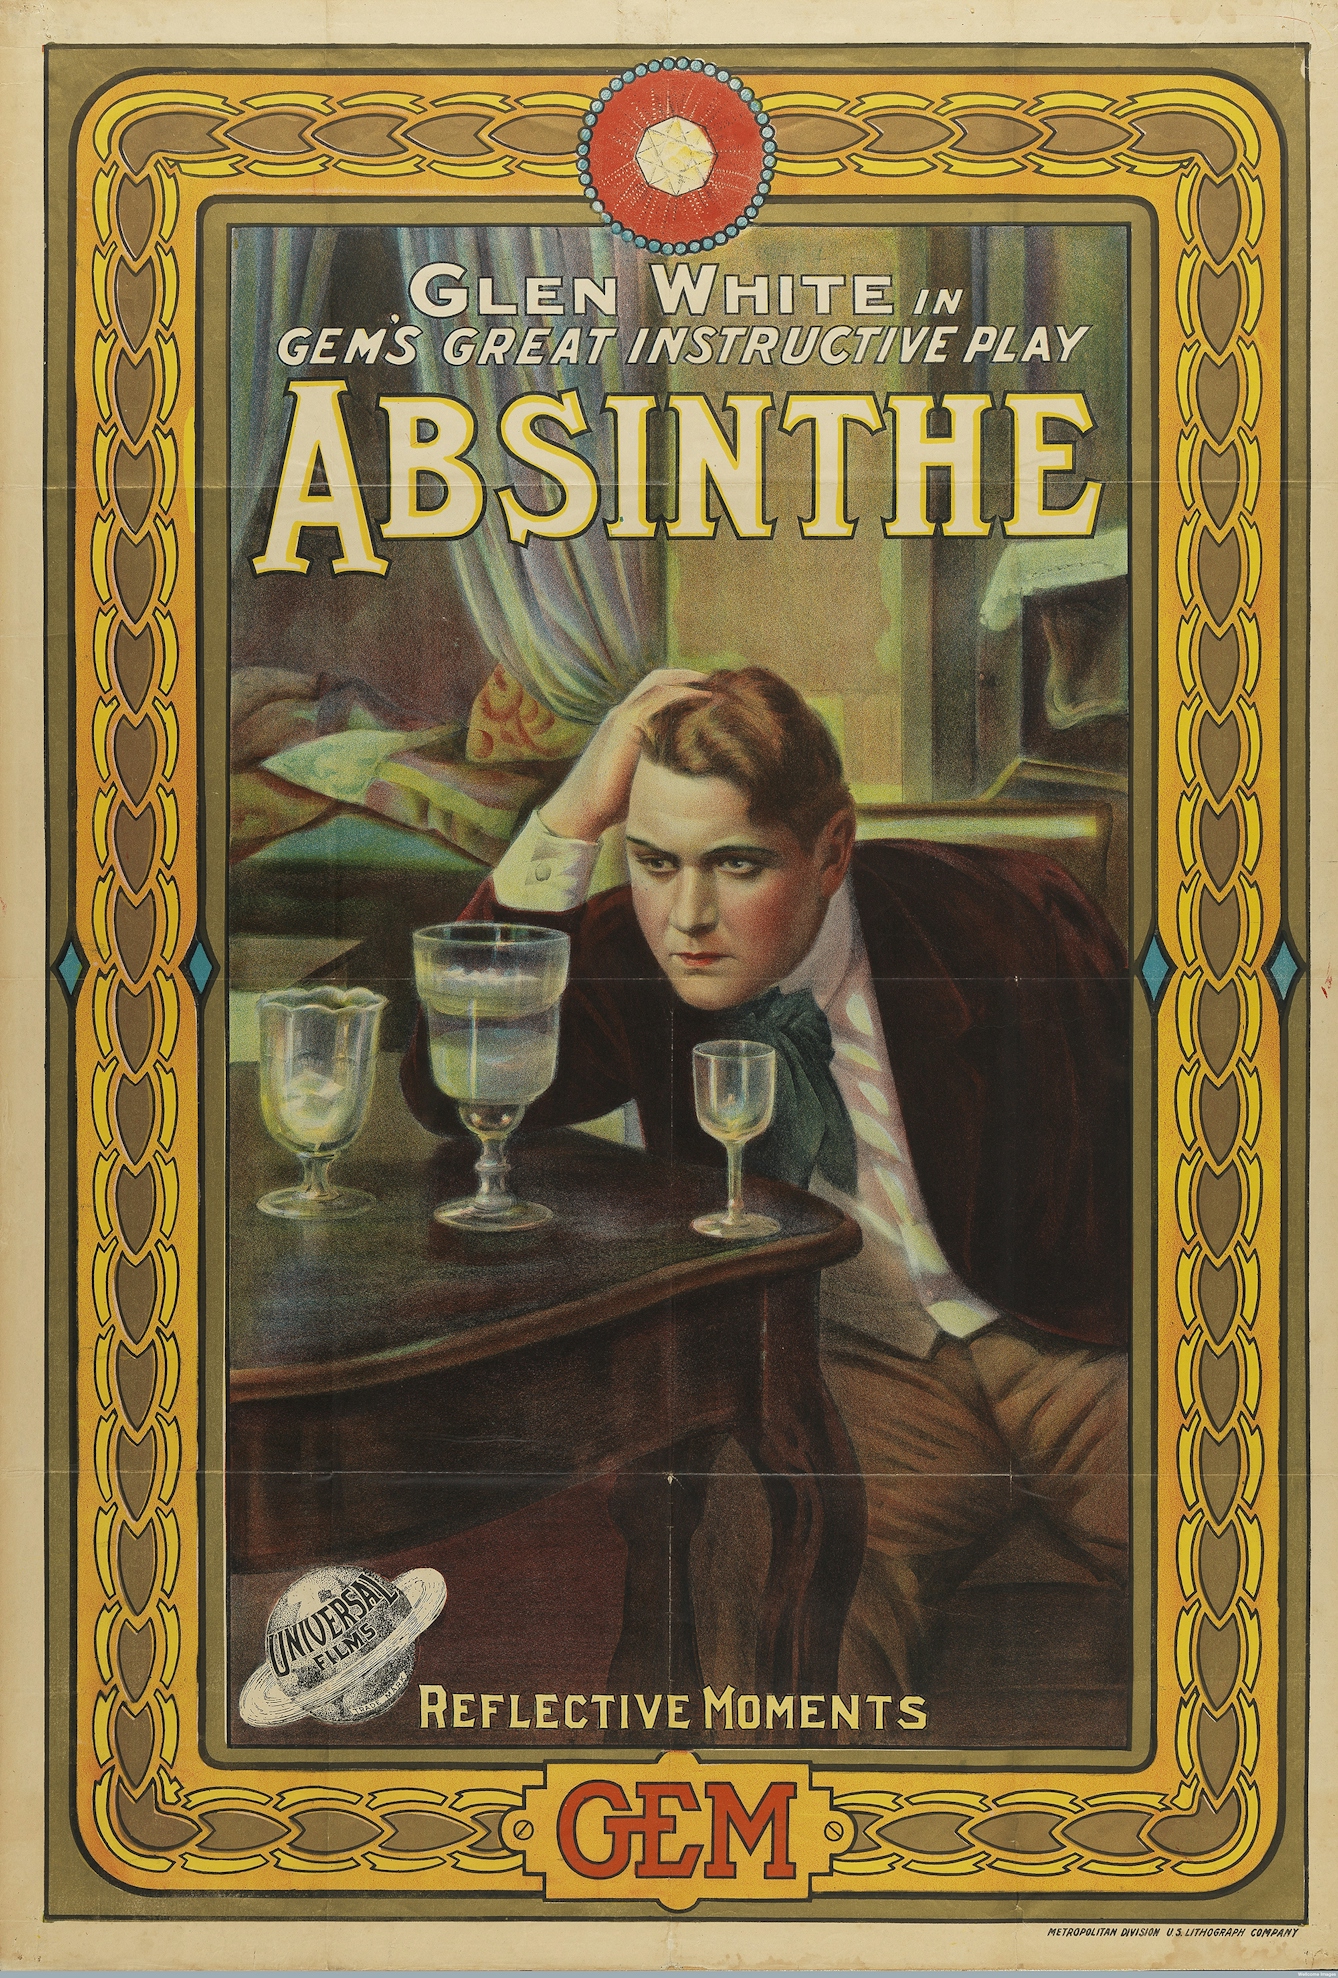 A man sits glumly looking at several glasses of absinthe.